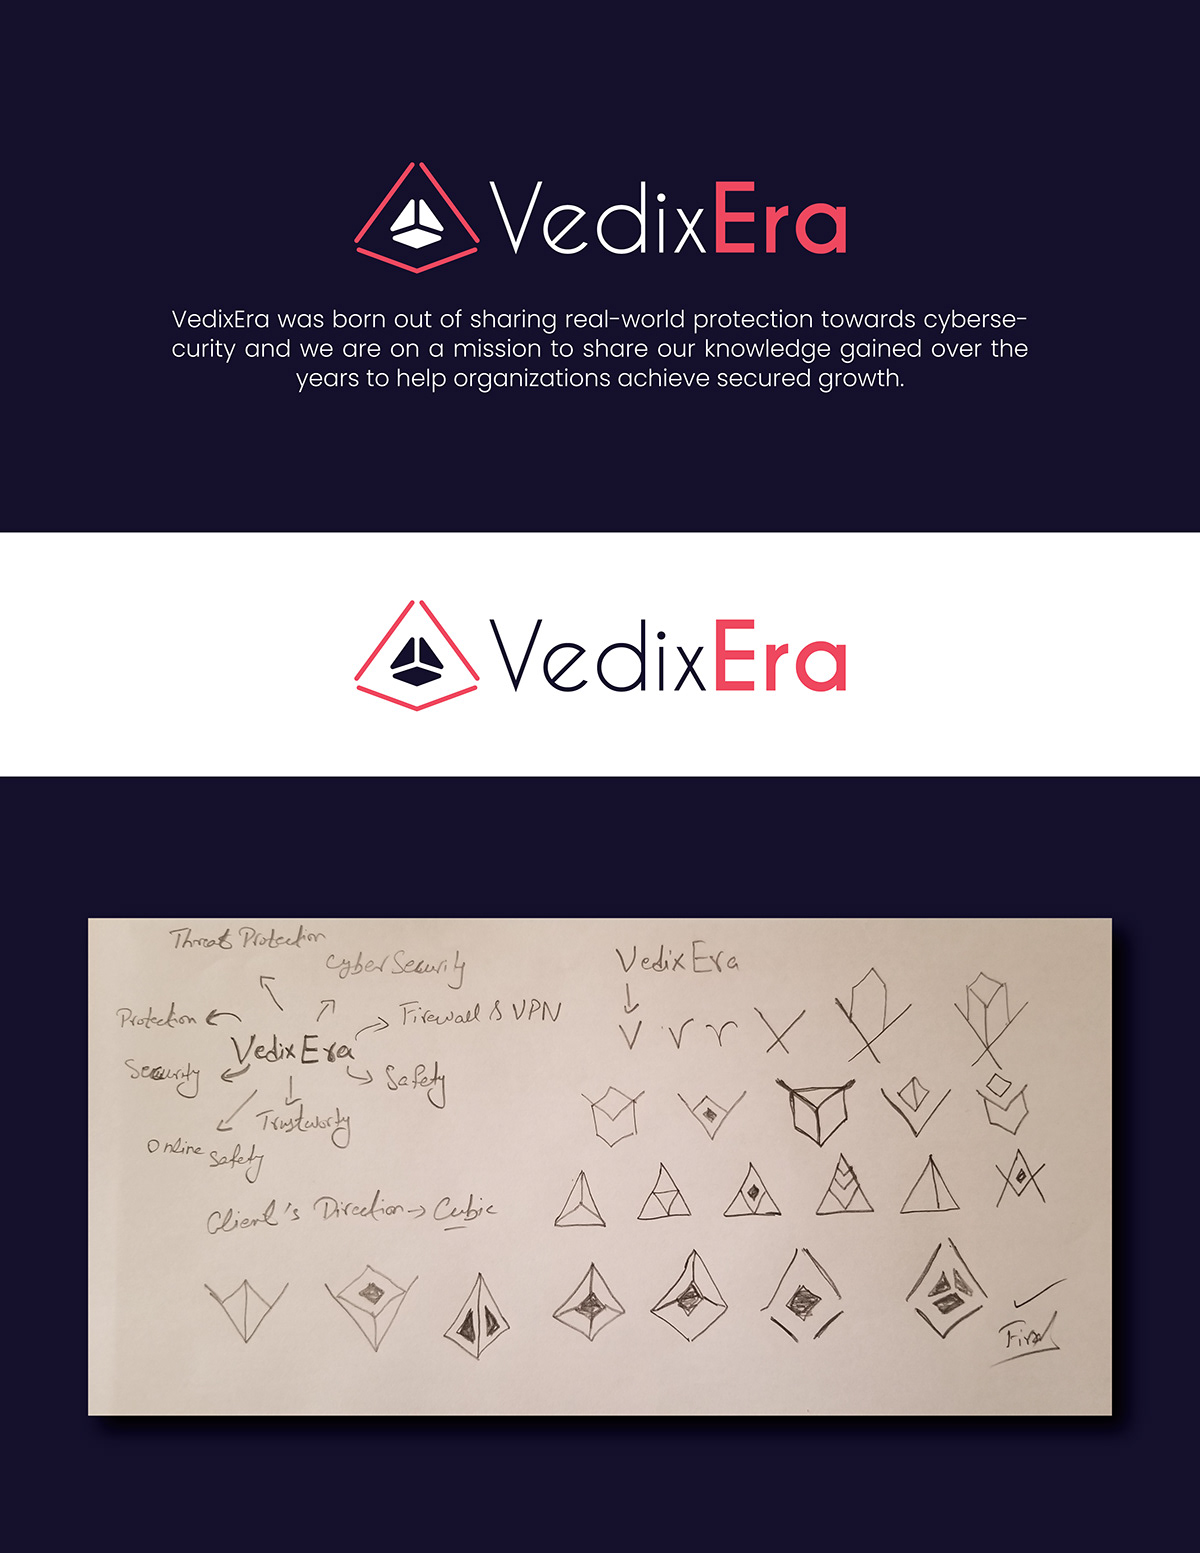 I created complete branding of vedixera.com